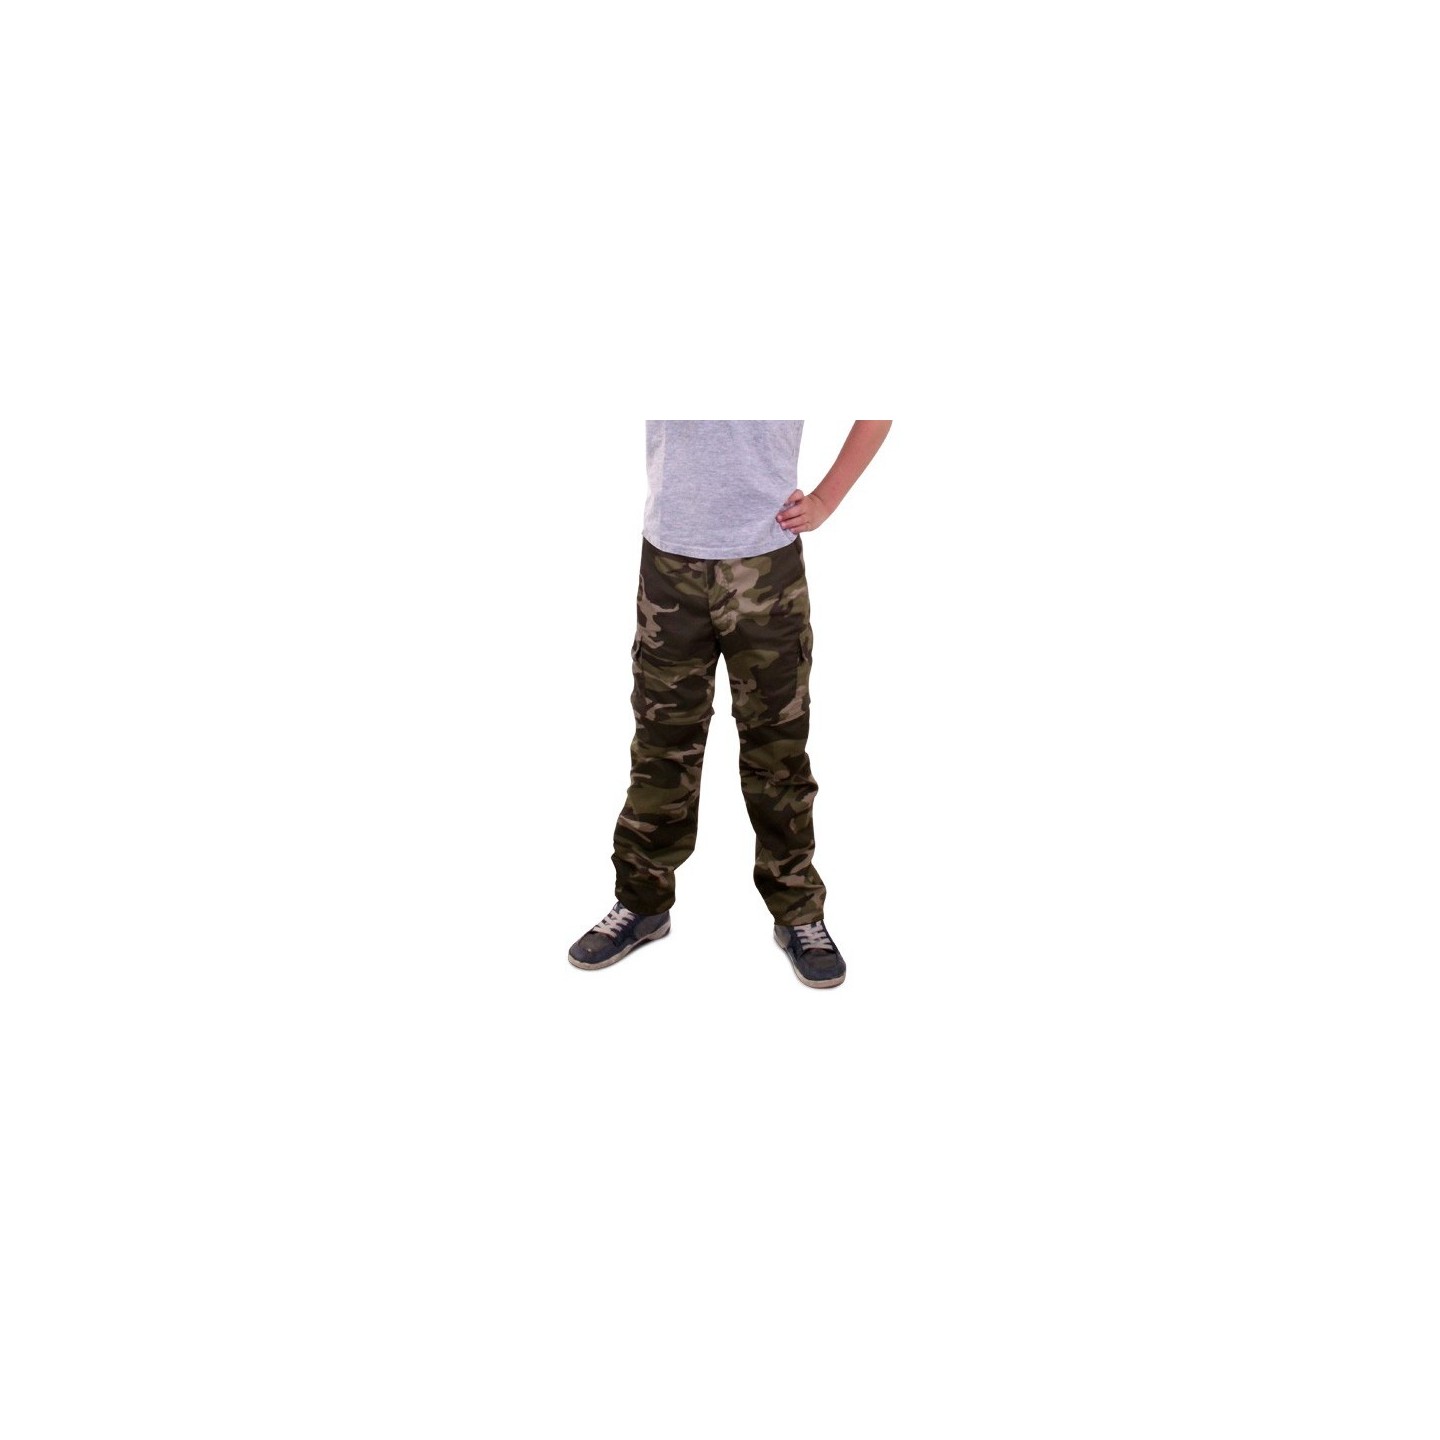 Camouflage broek | Leger verkleedkleding